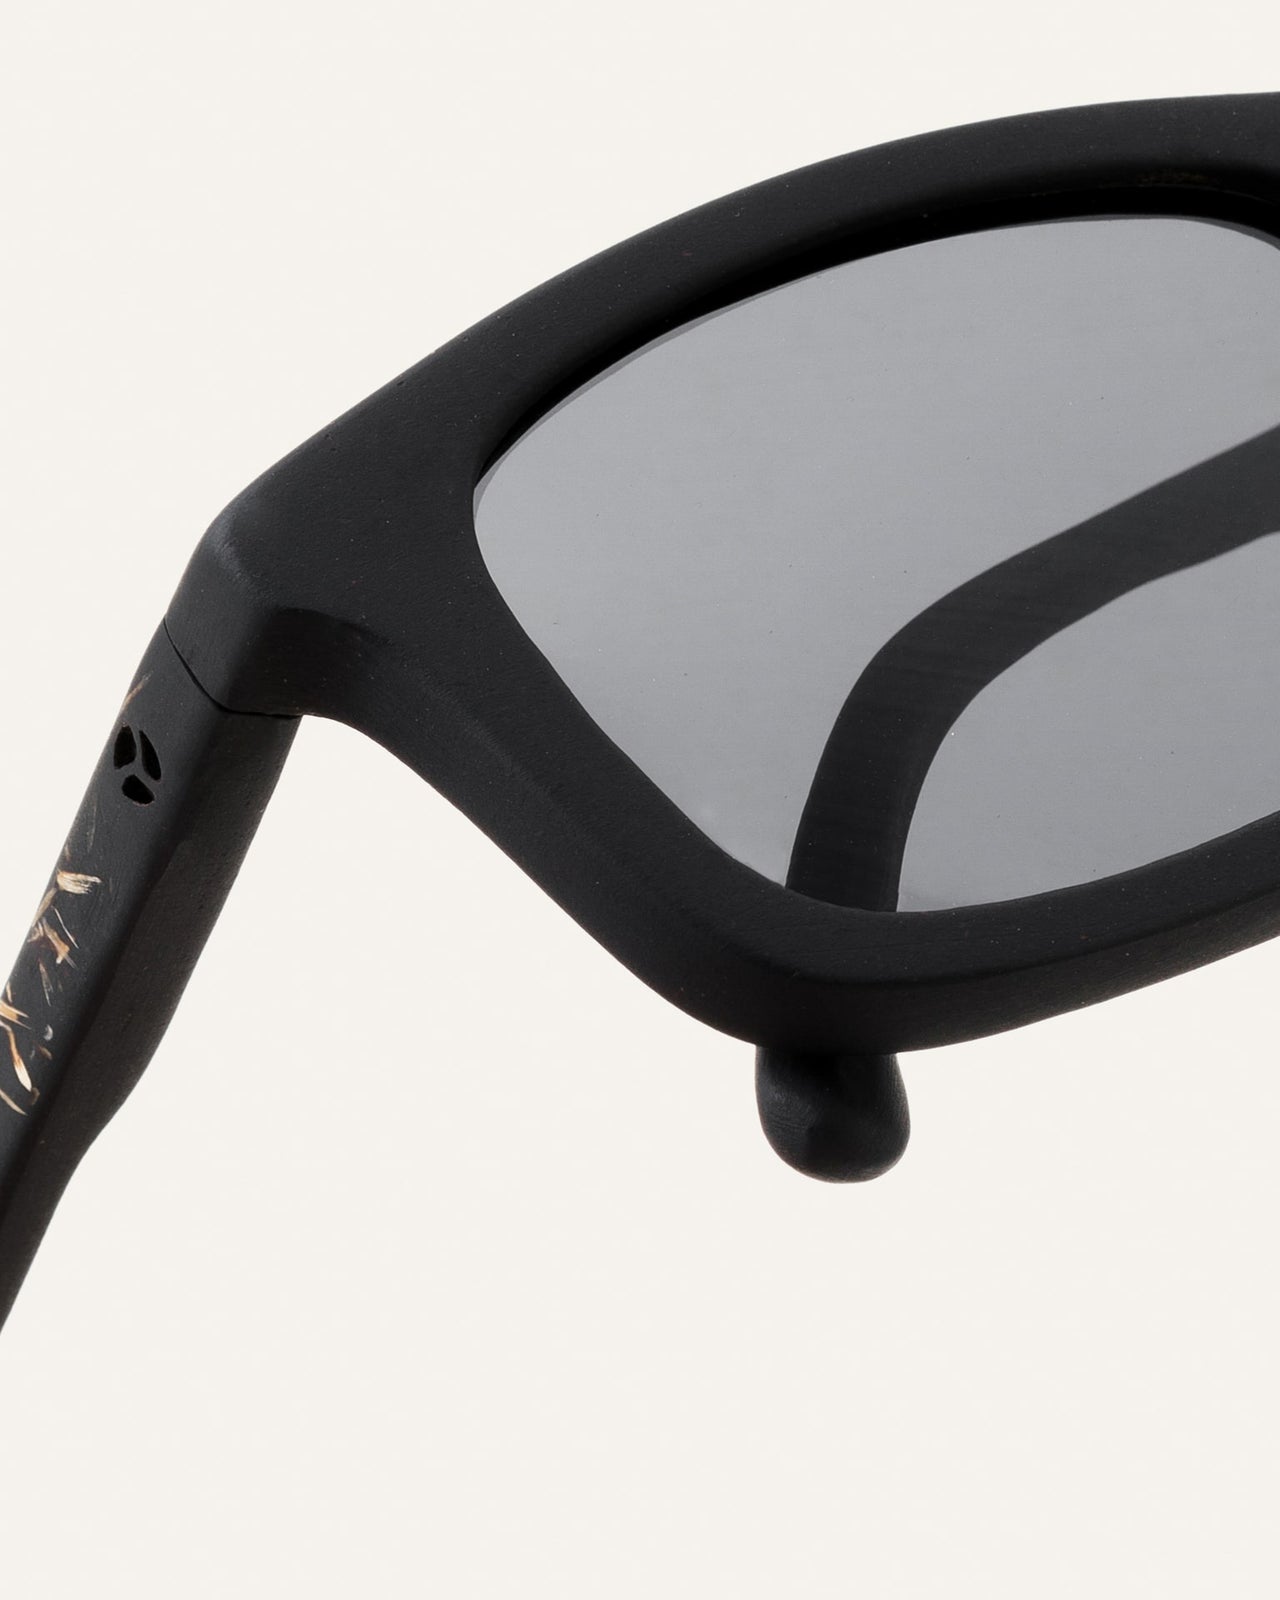 Dandy All Black Polarized Sunglasses, In stock!